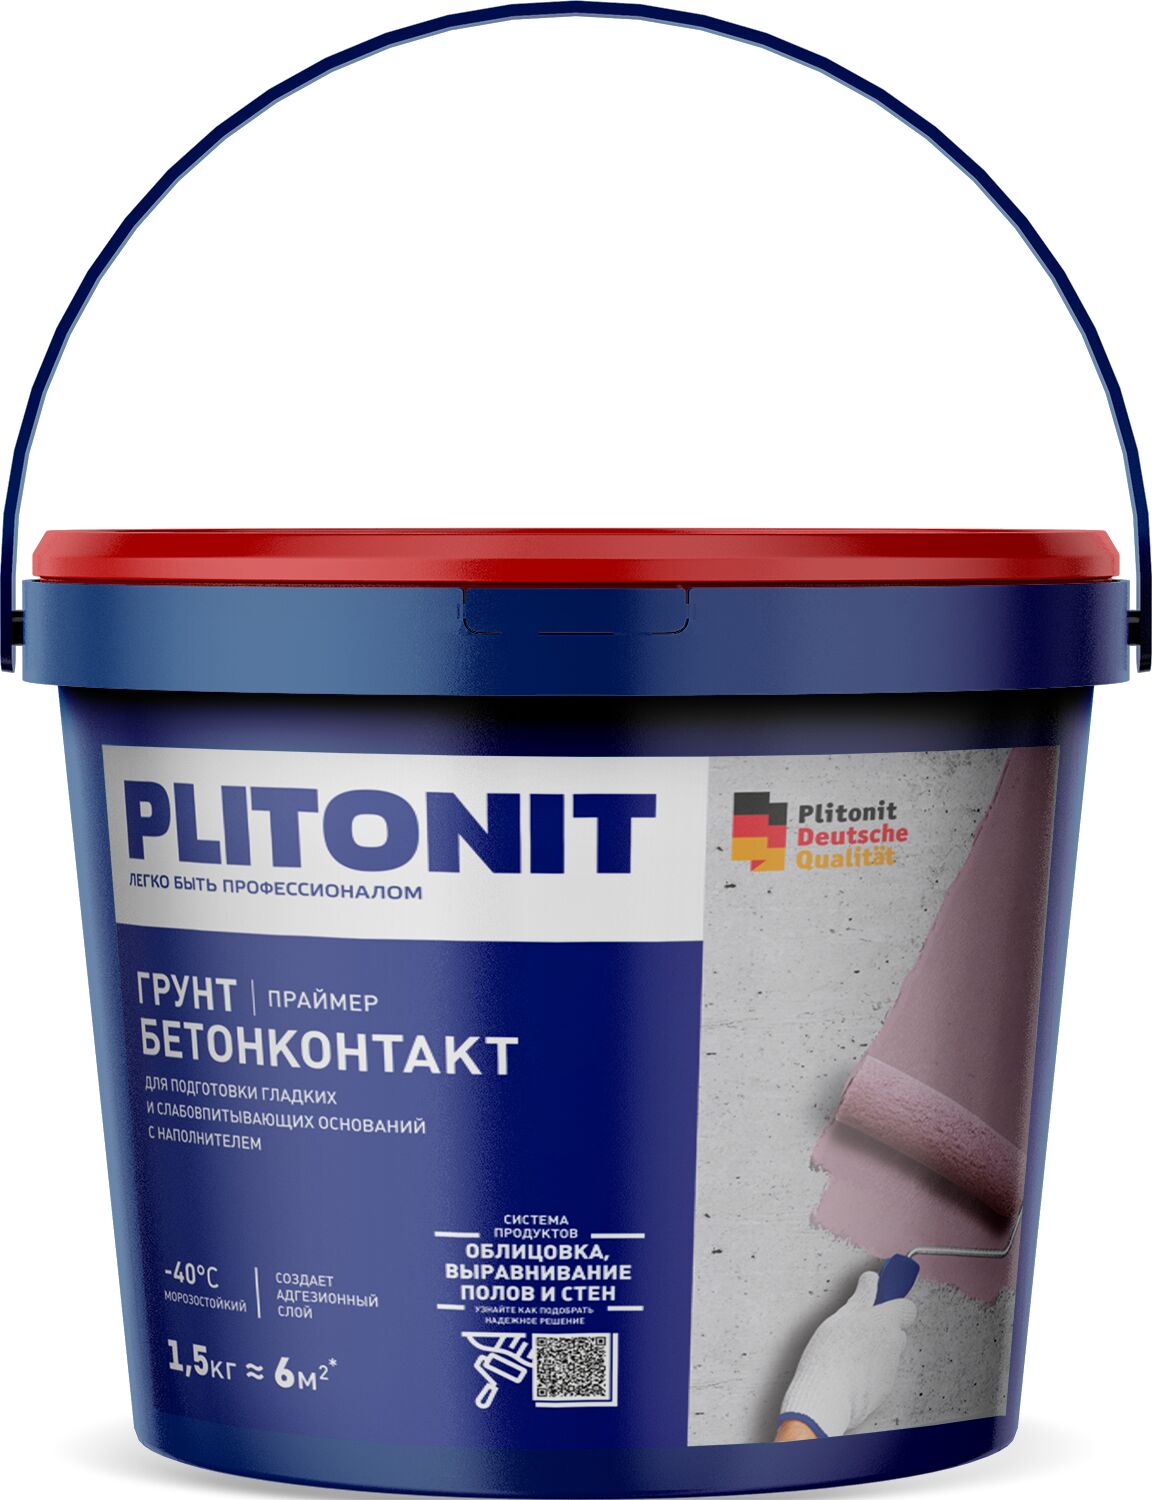 PLITONIT Грунт БетонКонтакт - 1,5 адгезионный праймер для обработки гладких оснований